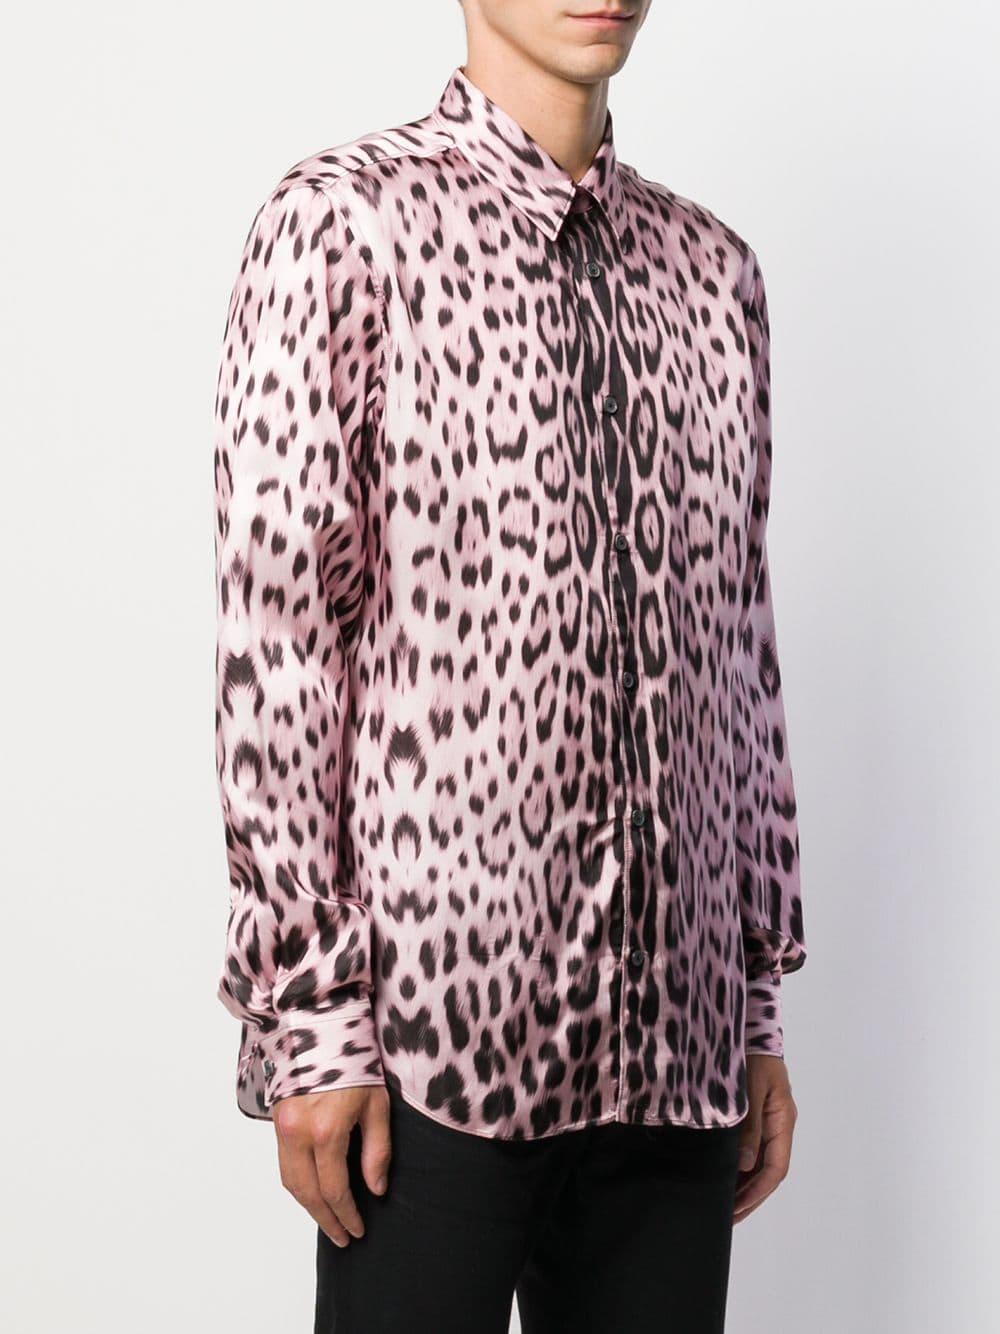 Roberto Cavalli Leopard-print Satin Shirt in Pink for Men - Lyst